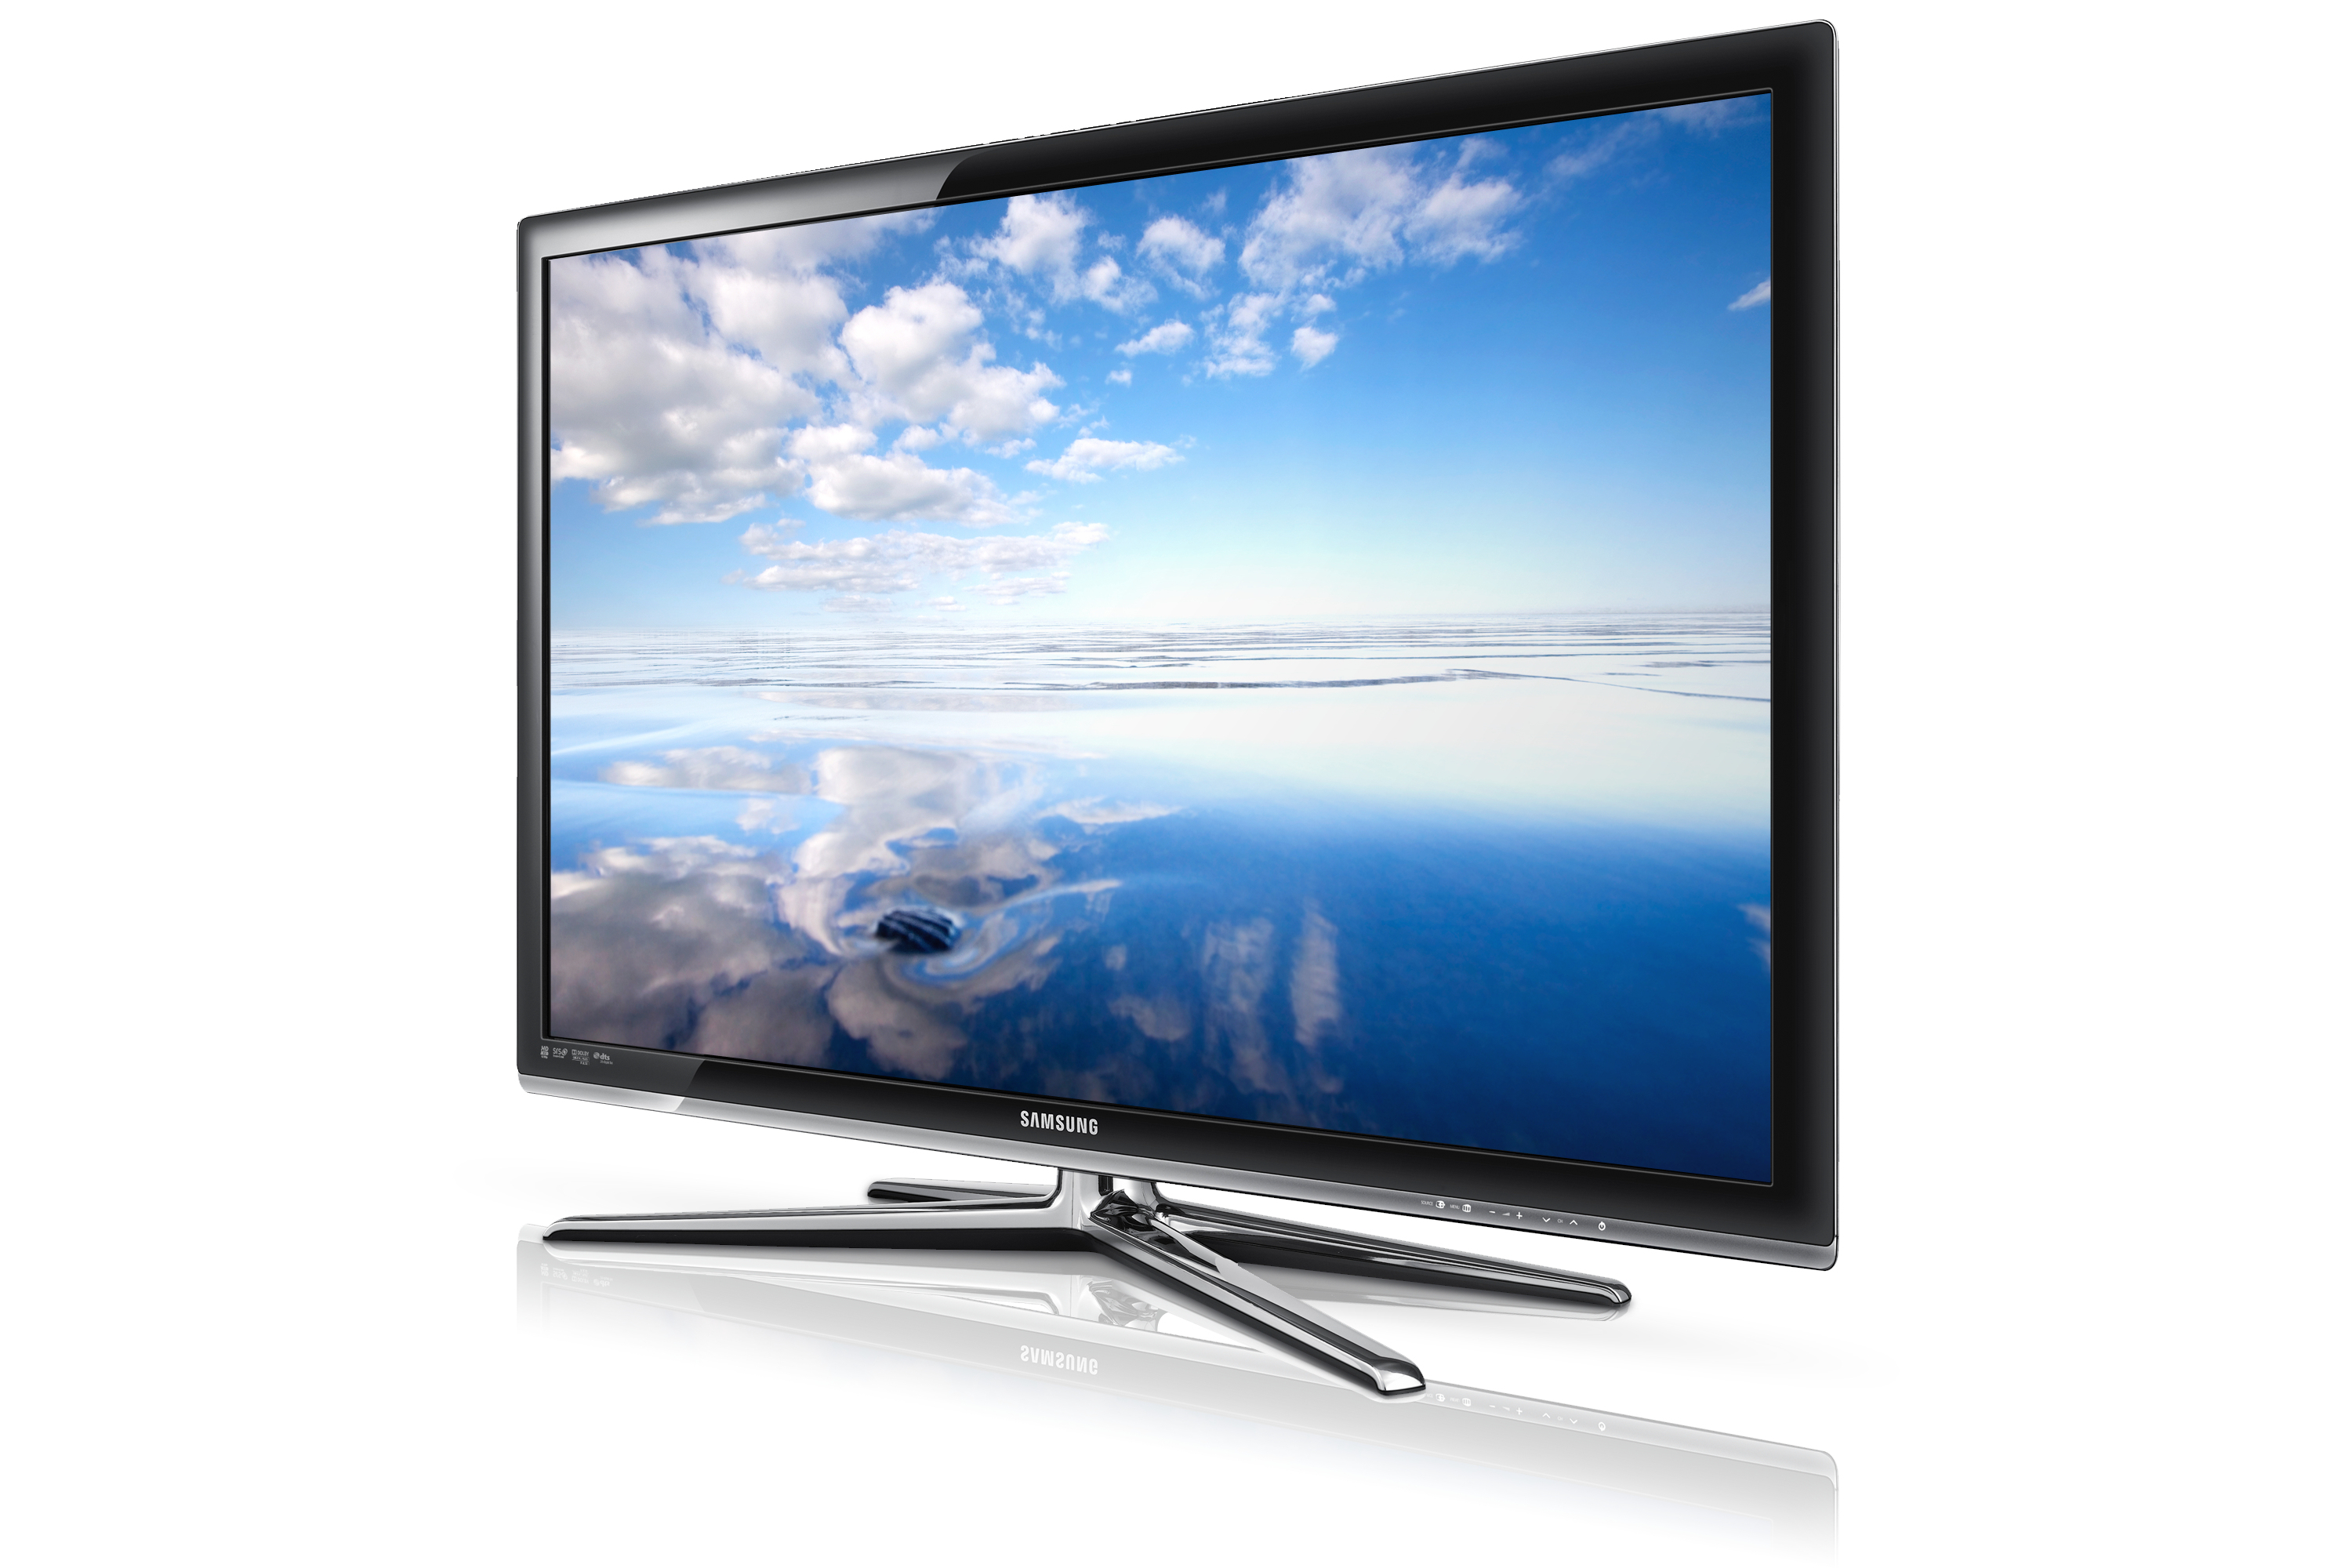 Телевизор самсунг цены отзывы. Samsung ue46c7000 led. Samsung 40 7000. Самсунг led 40. Телевизор самсунг 40ue5000.